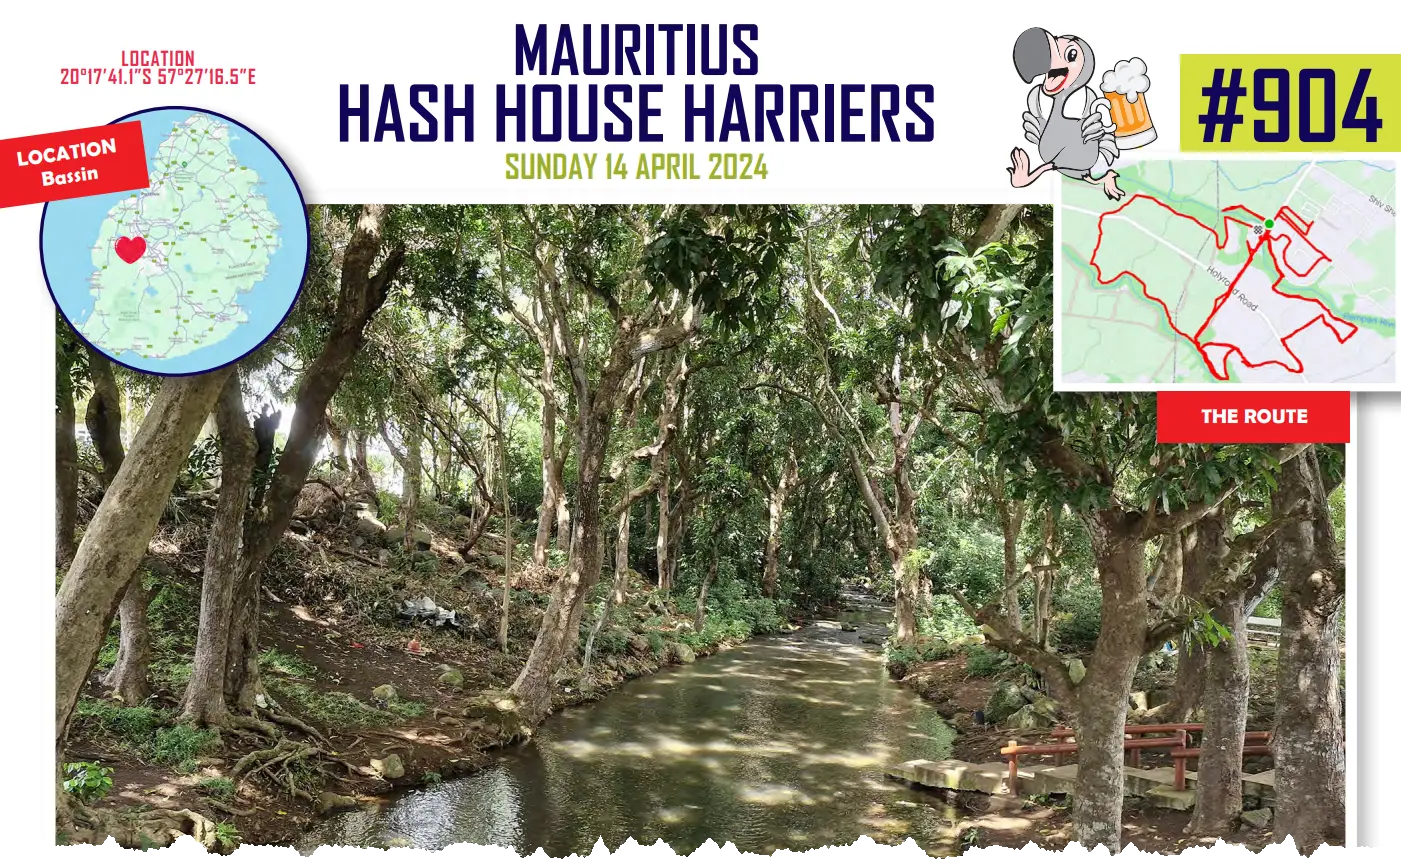 904 featured image hash trash mauritius